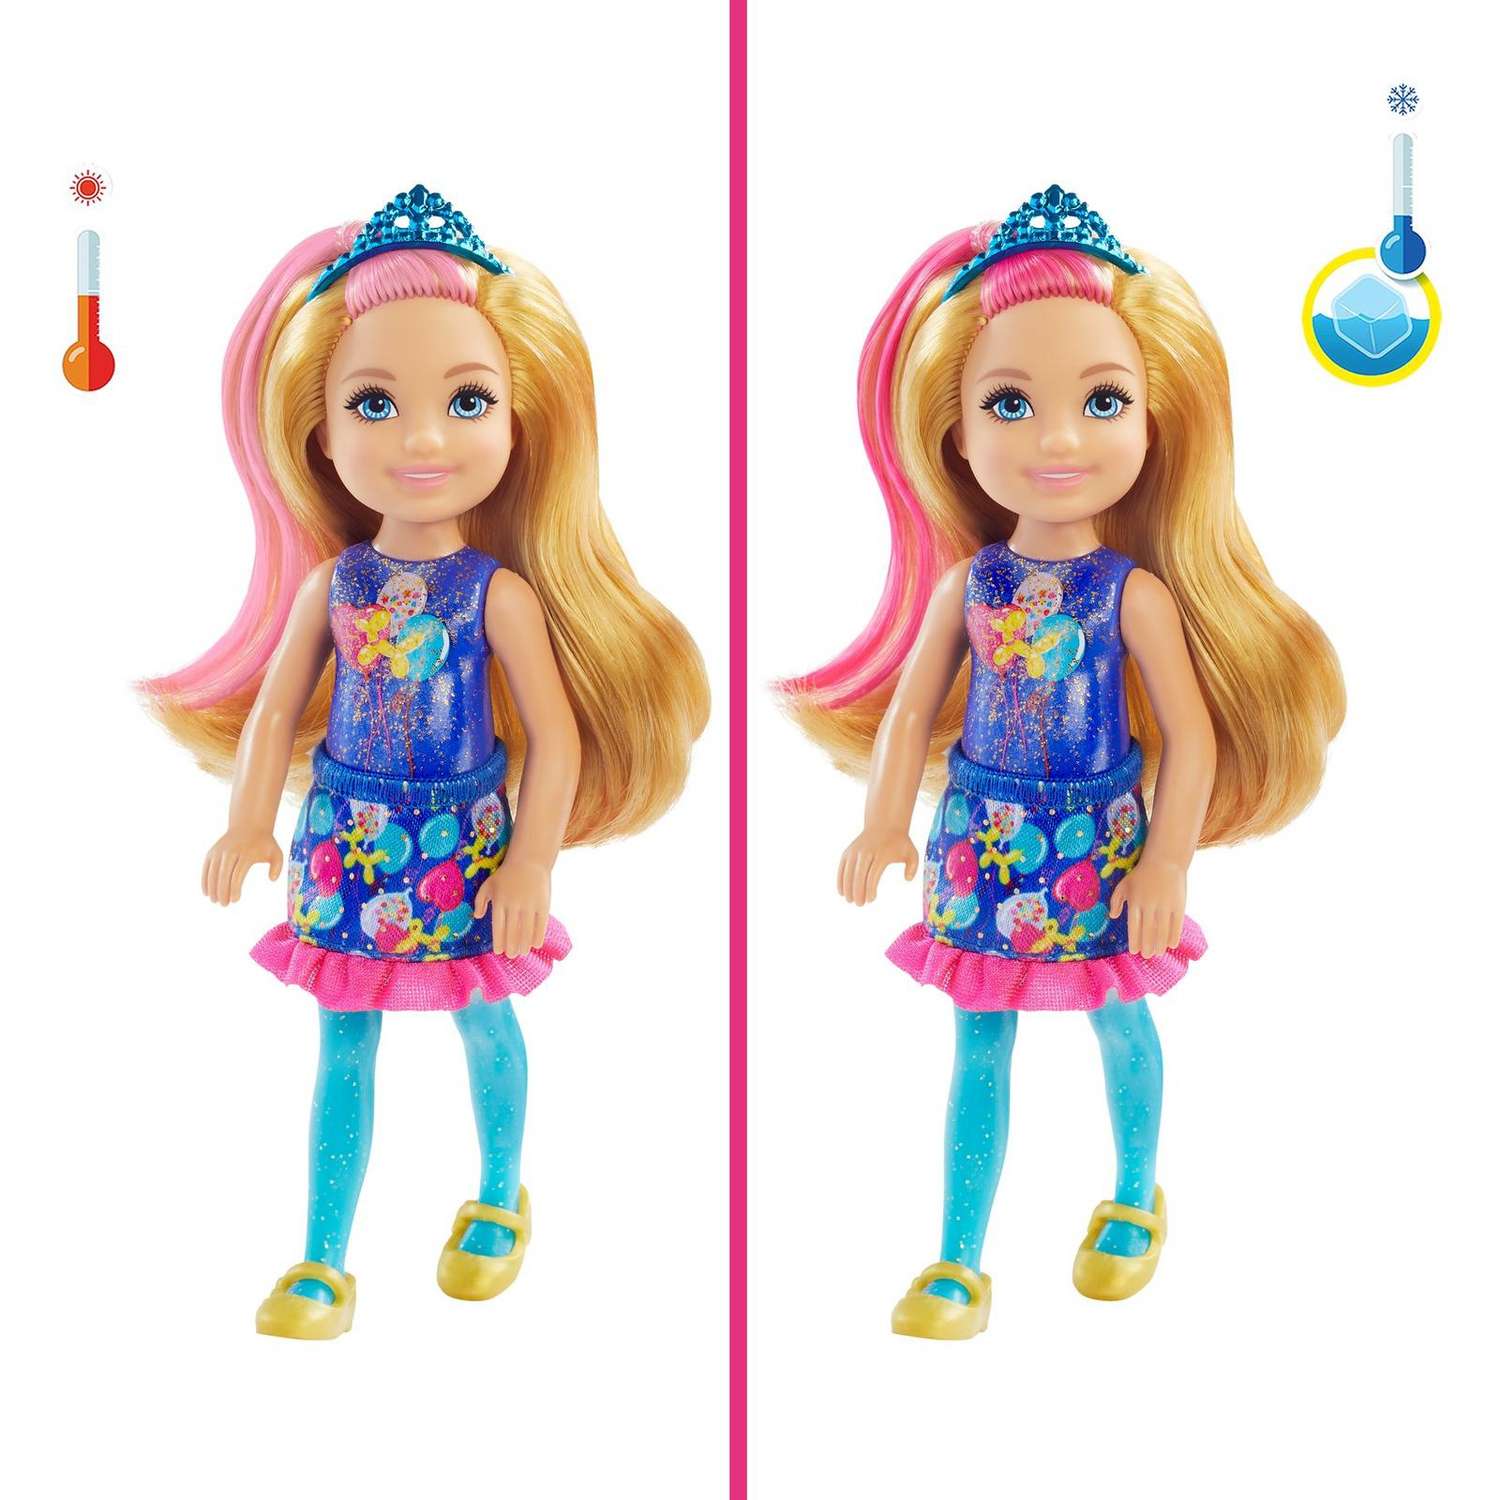 Кукла Barbie Челси в ярких нарядах для вечеринки в непрозрачной упаковке (Сюрприз) GTT26 GTT26 - фото 7